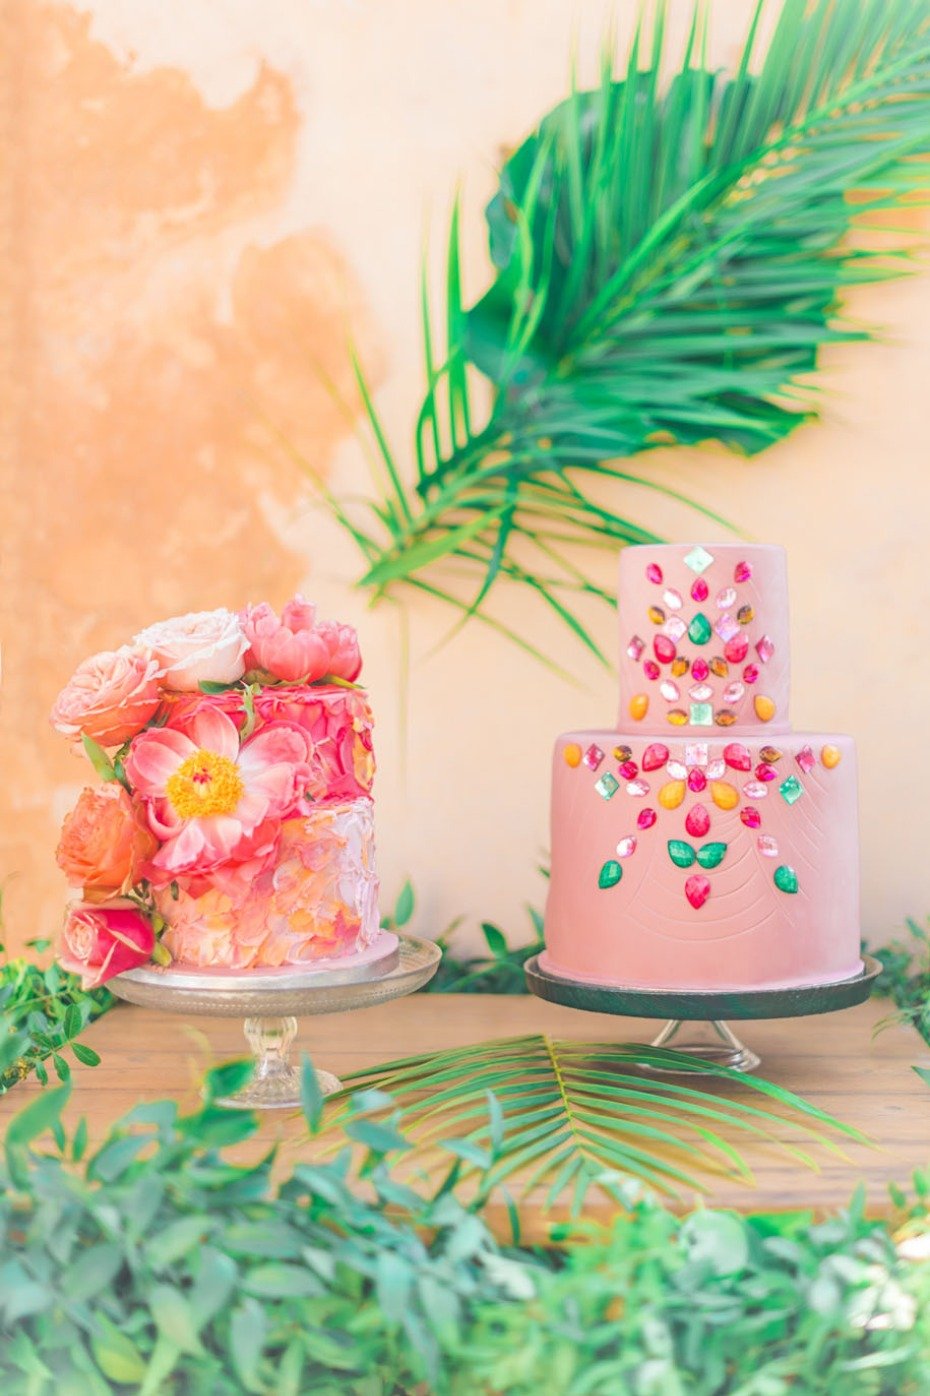 Pretty cakes from Alexandraâs Cakes